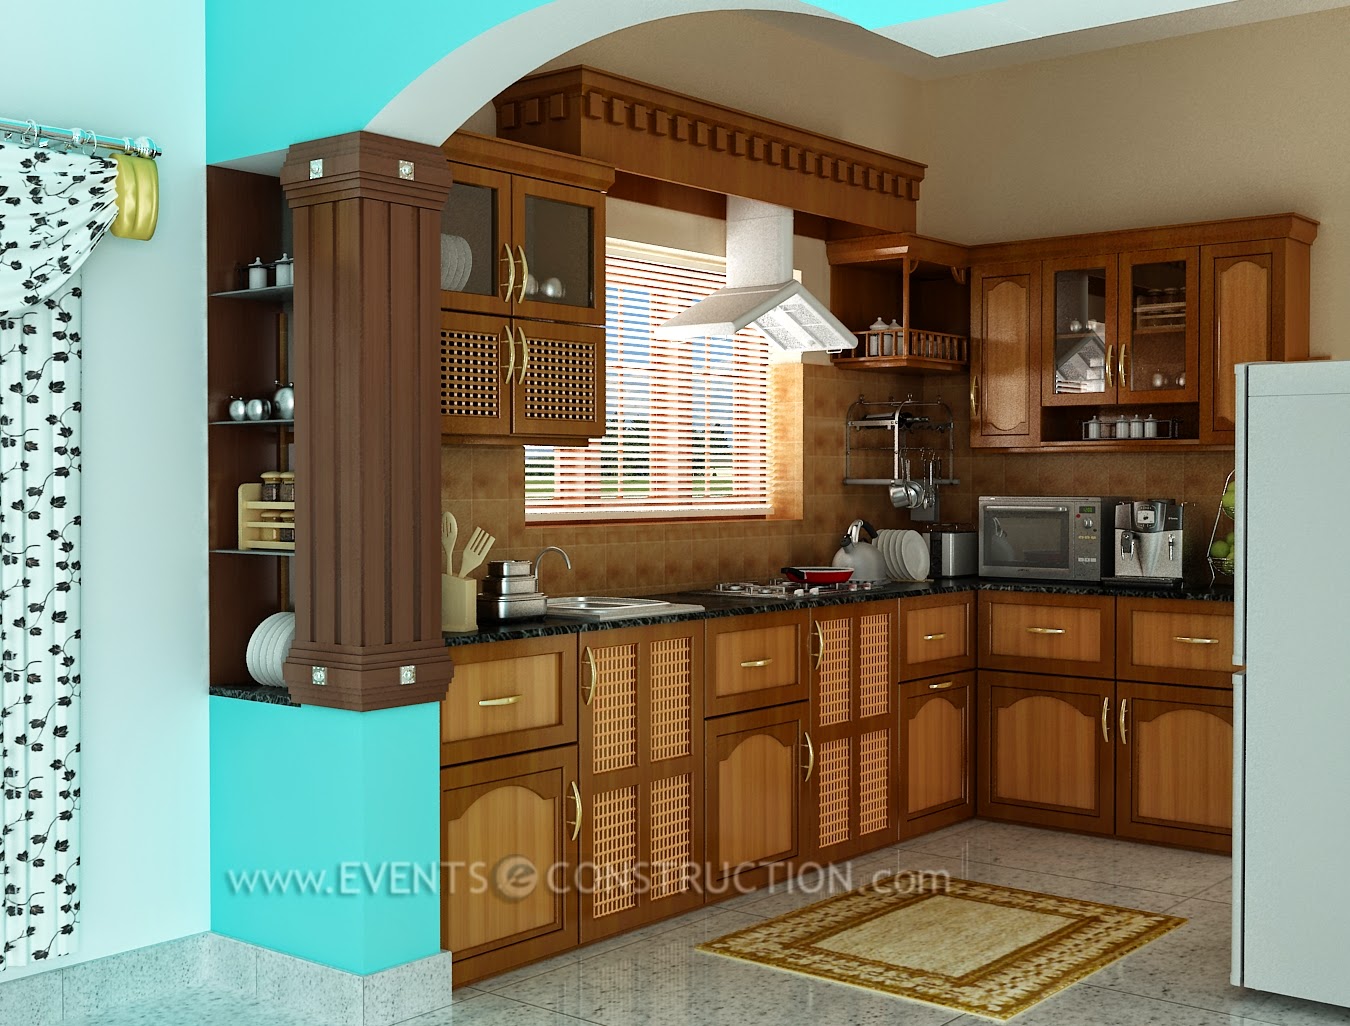 Evens Construction Pvt Ltd: Kerala kitchen interior design